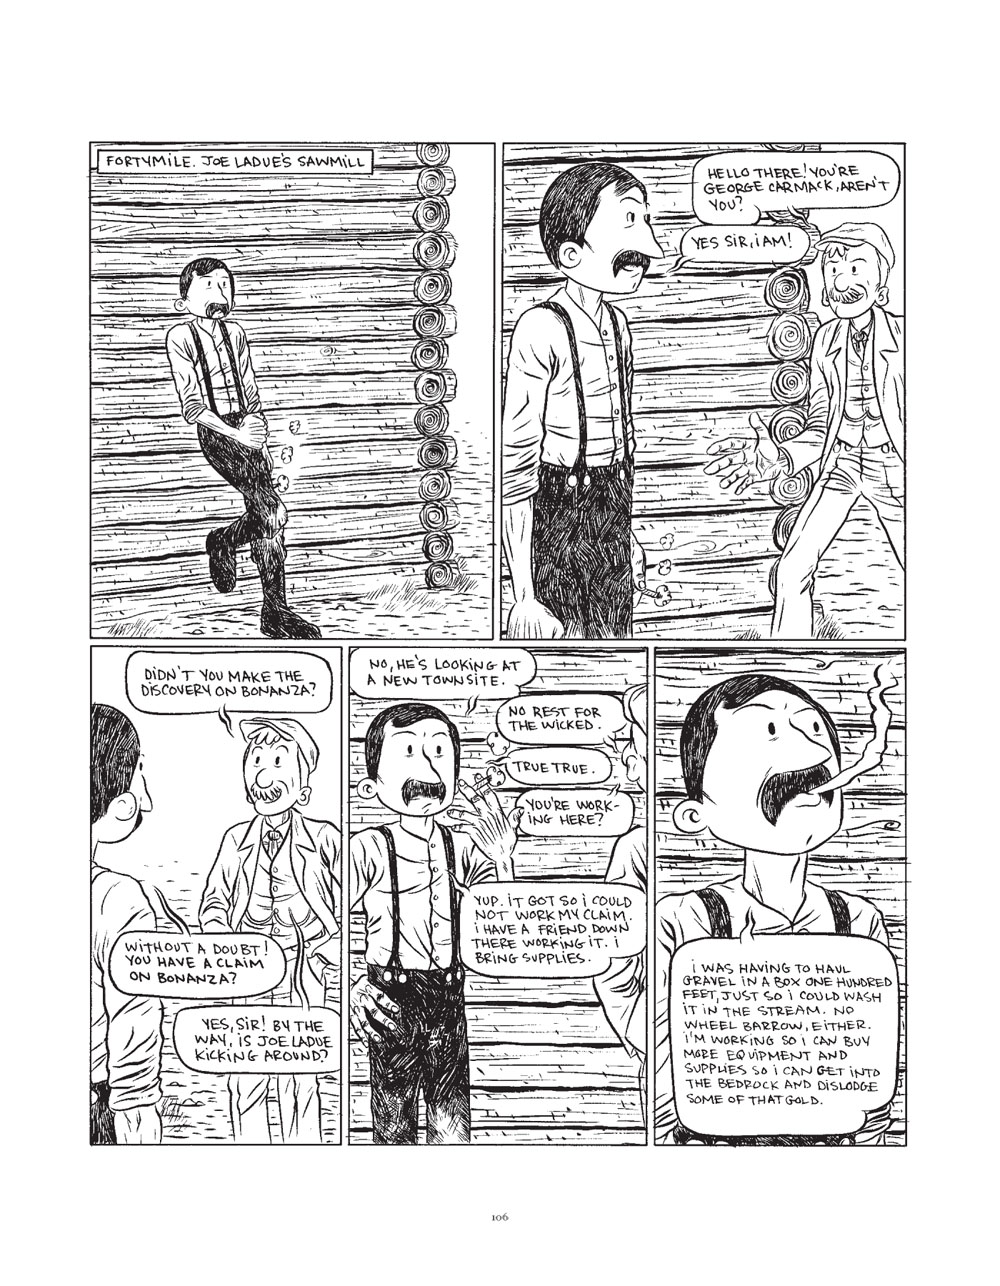 The Klondike Page 106